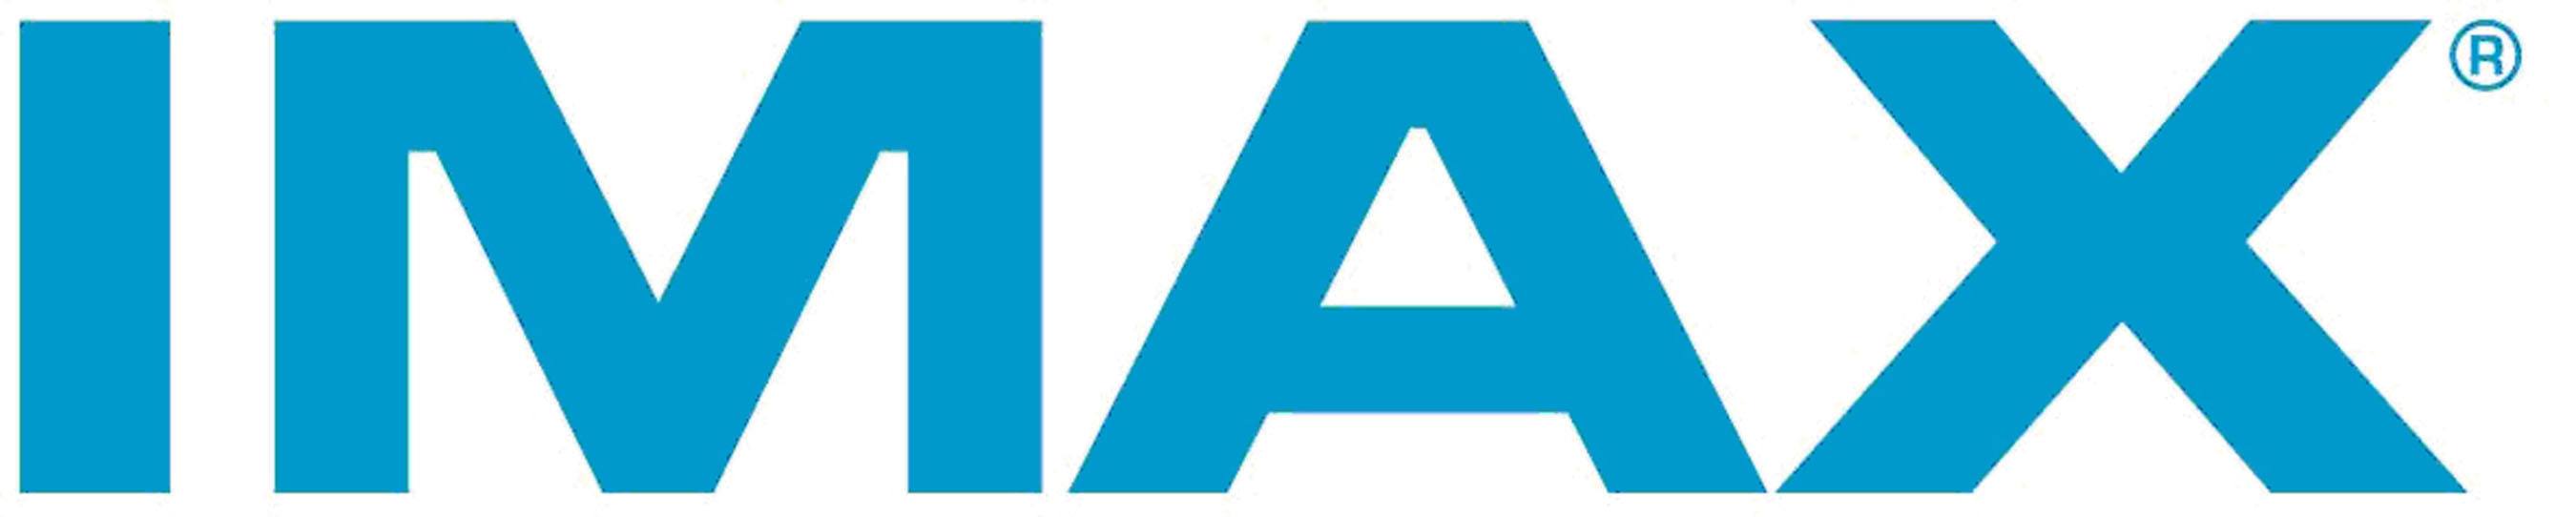 IMAX公司全球統一標誌